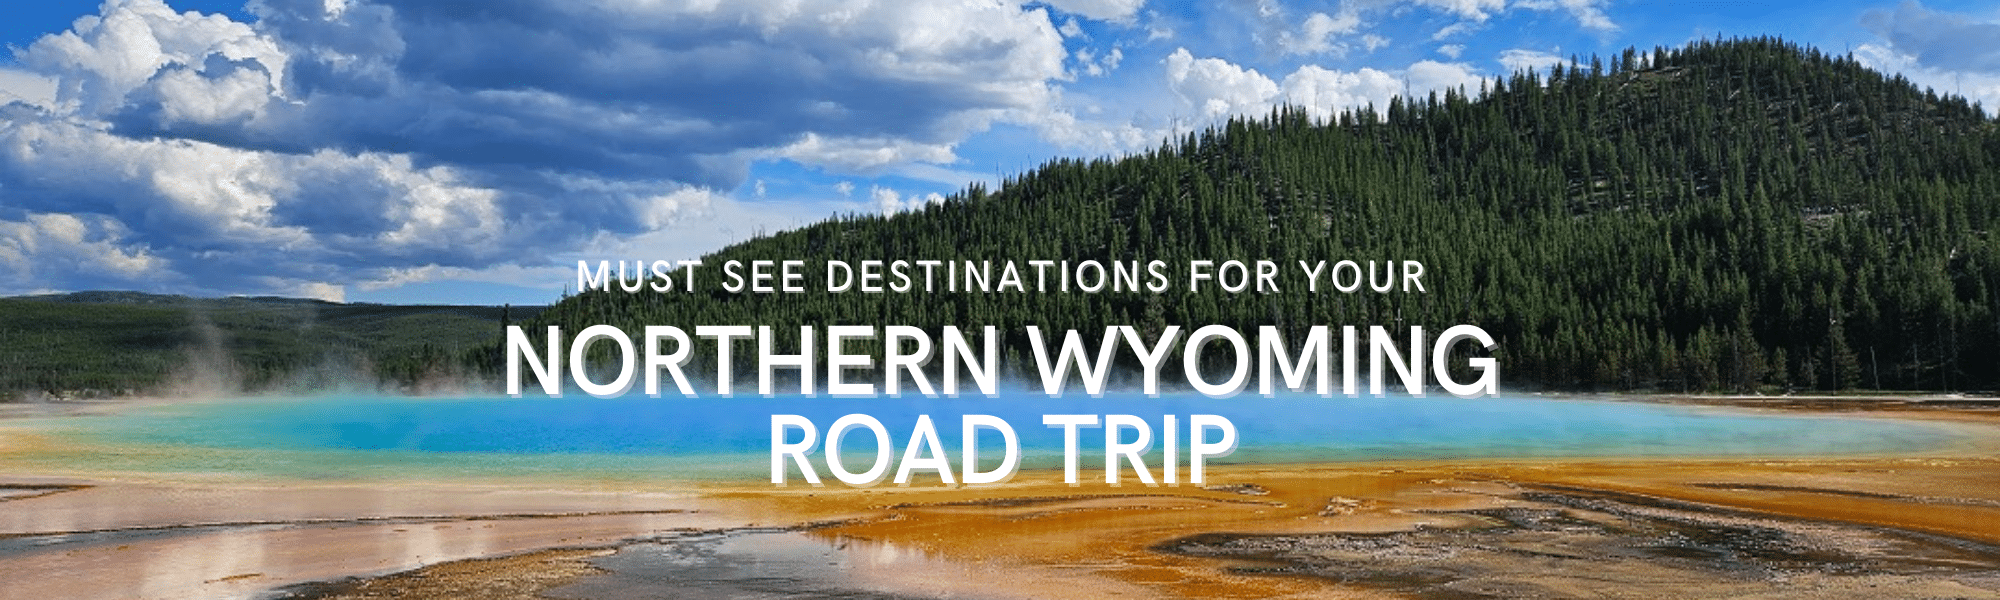 Northern Wyoming Road Trip